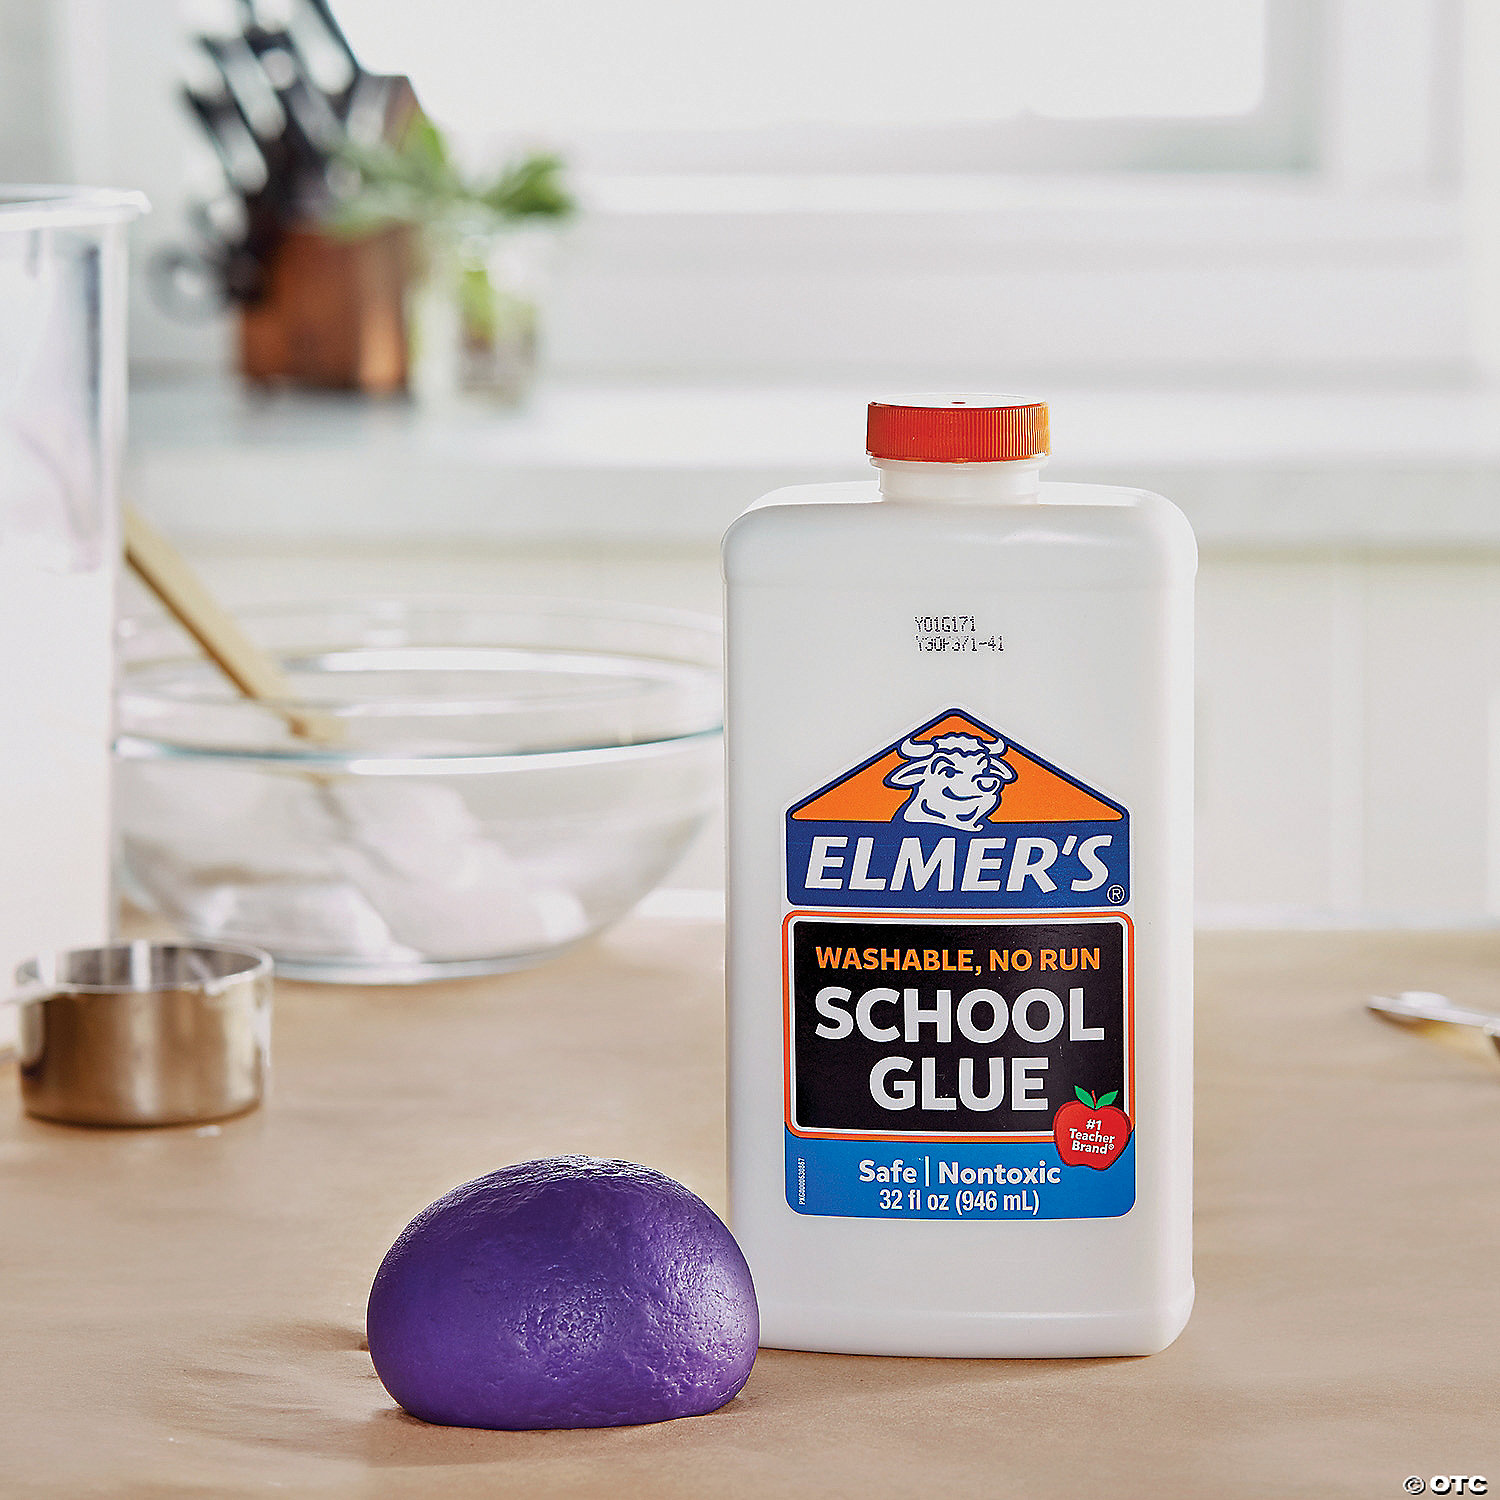 Elmer's® Washable Clear School Glue - 1 Quart